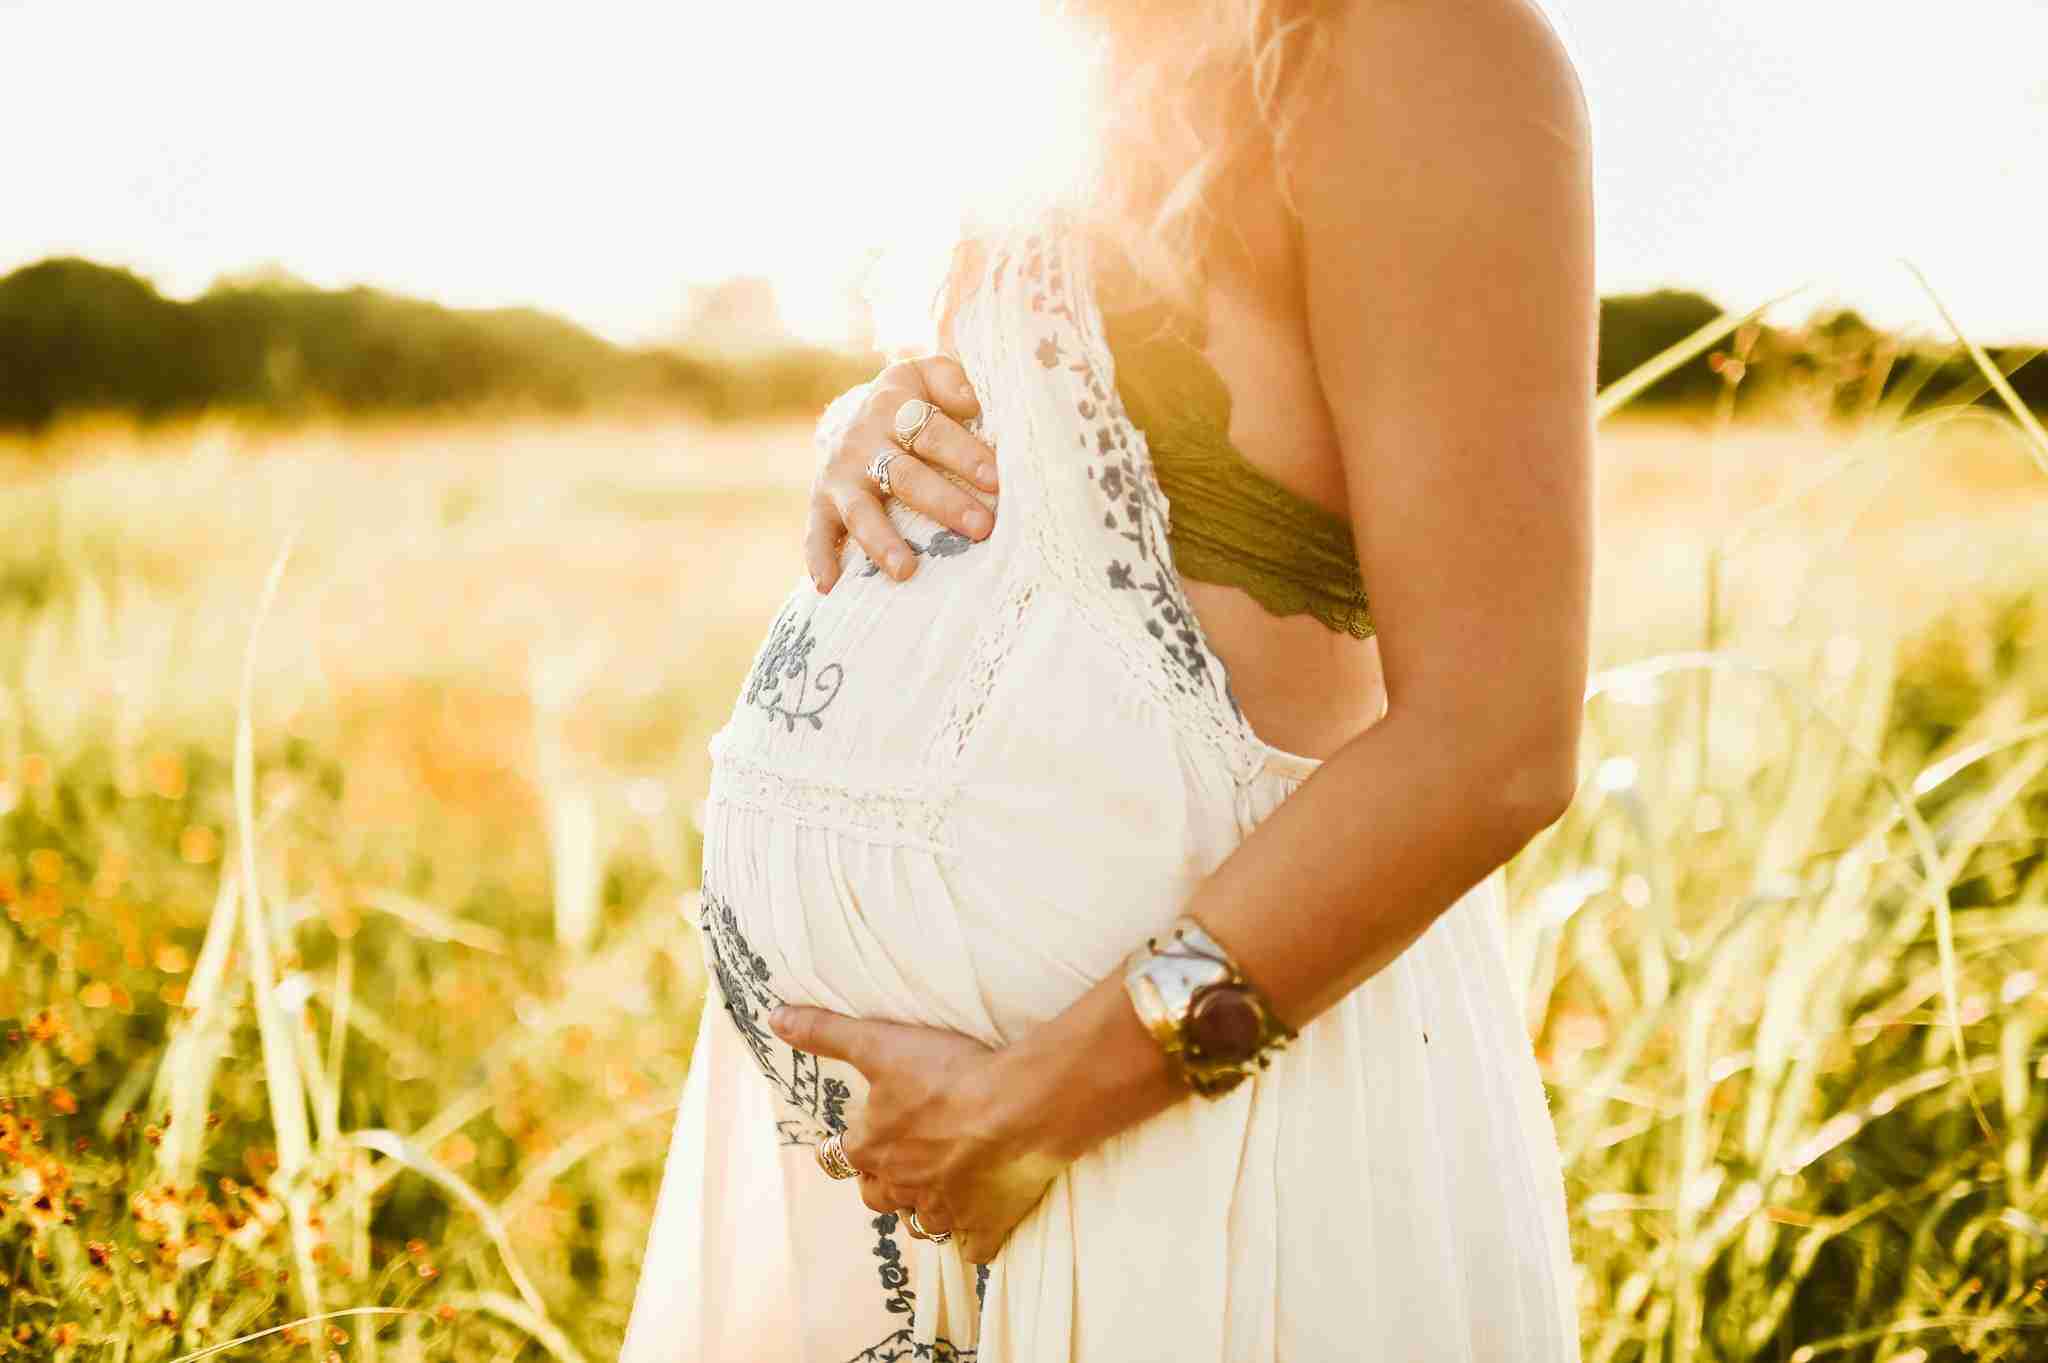 Arkansas Maternity Photography Pricing